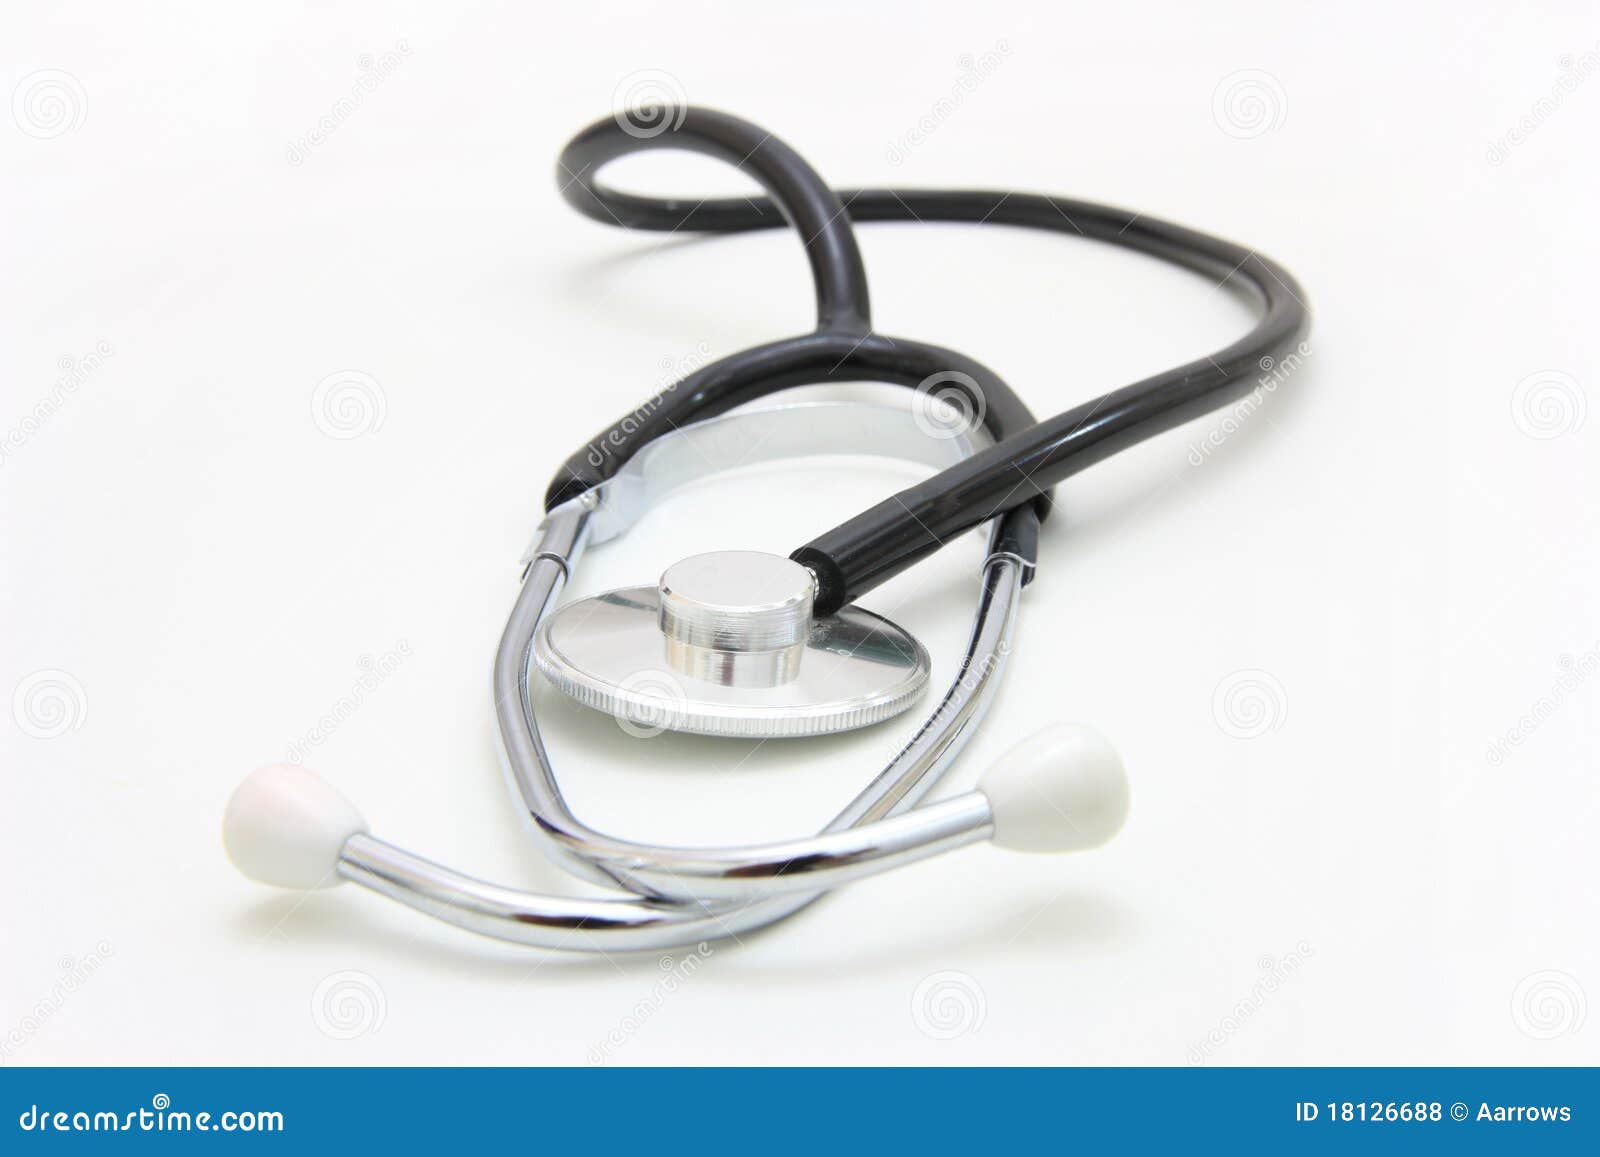 the medical stetoskop